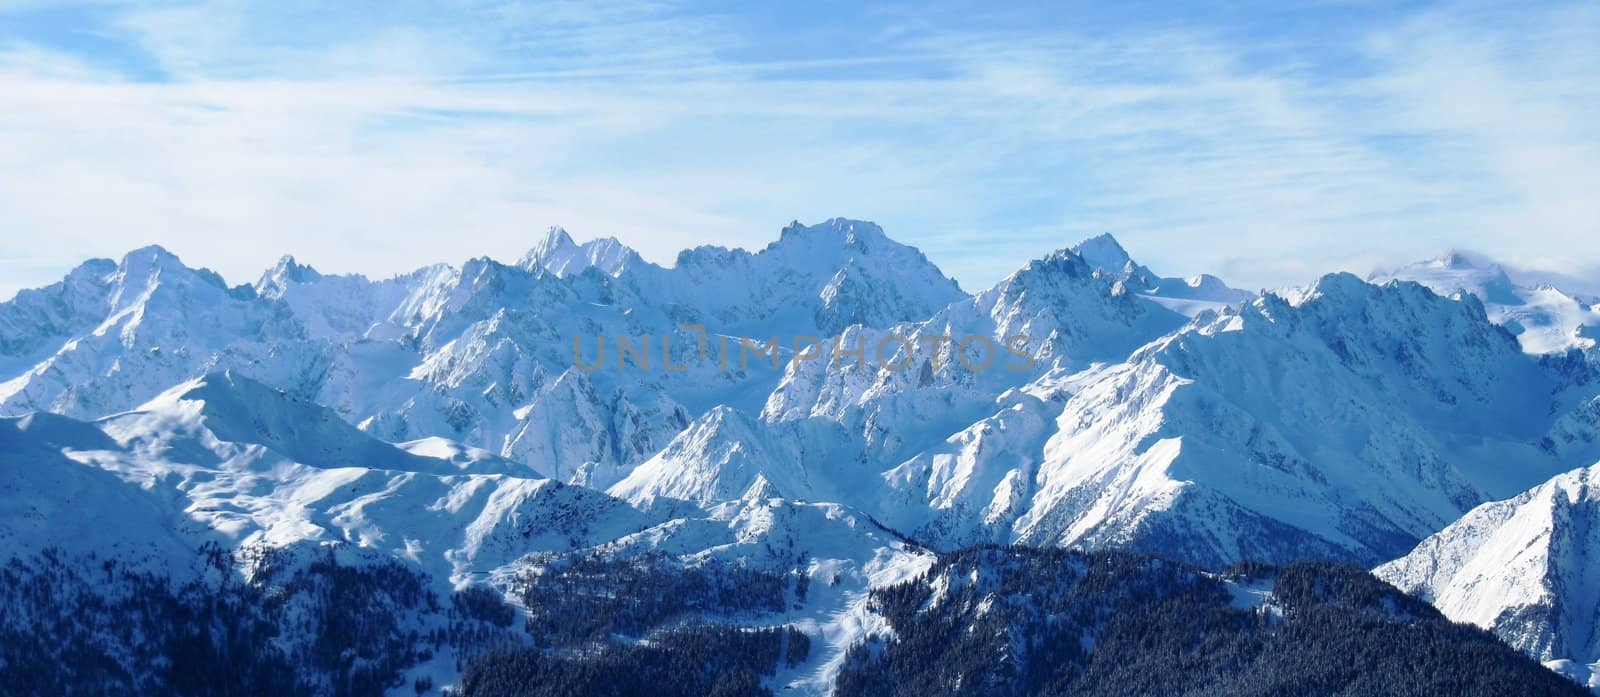 Alpine Mountain peaks by chrisga